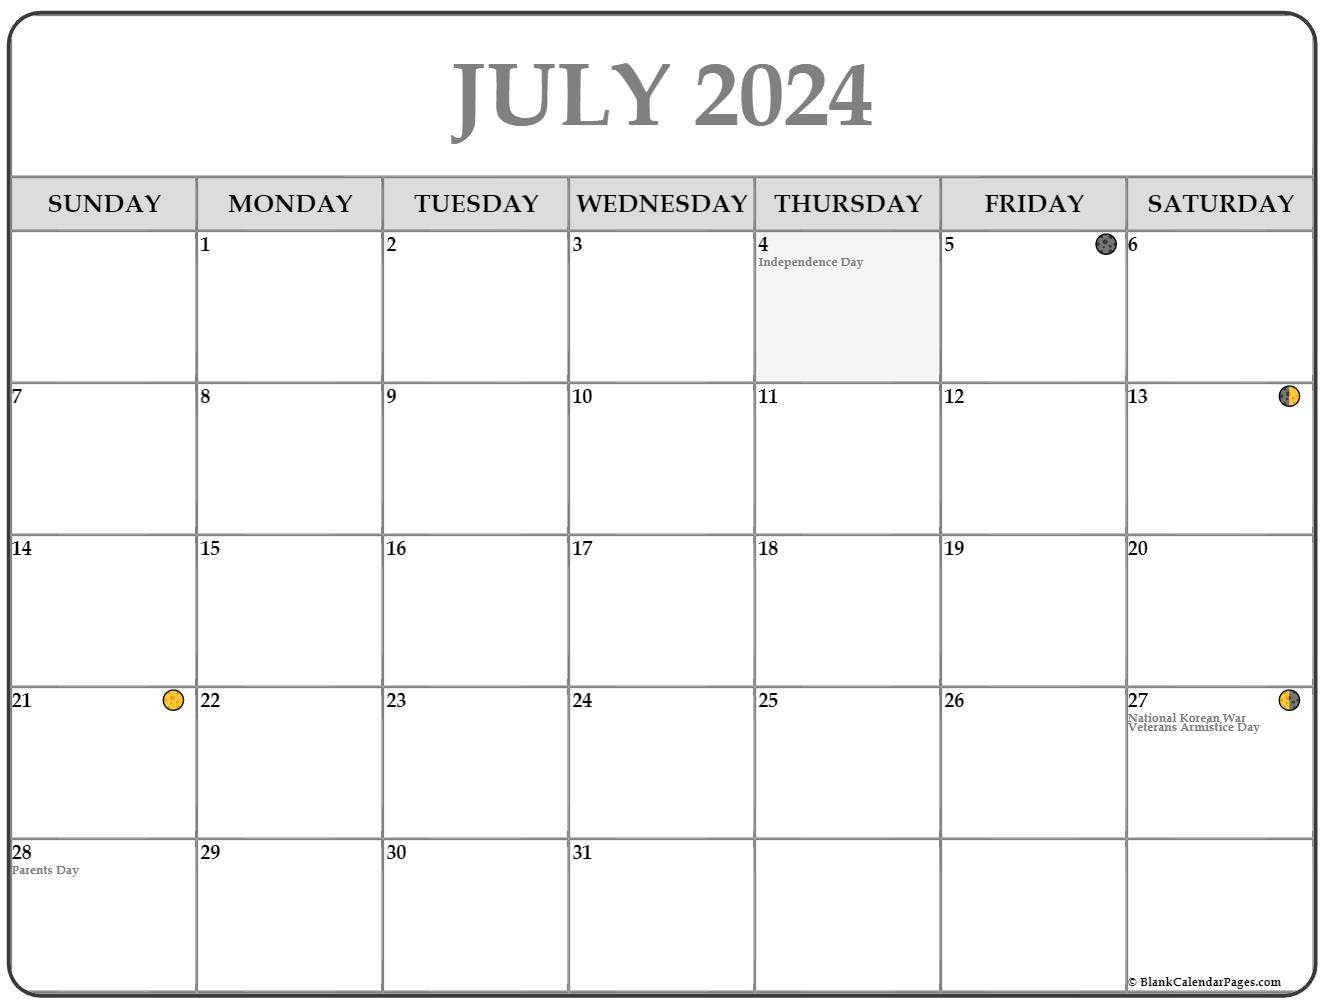 July 2024 Lunar Calendar | Moon Phase Calendar for Moon Phases Calendar July 2024